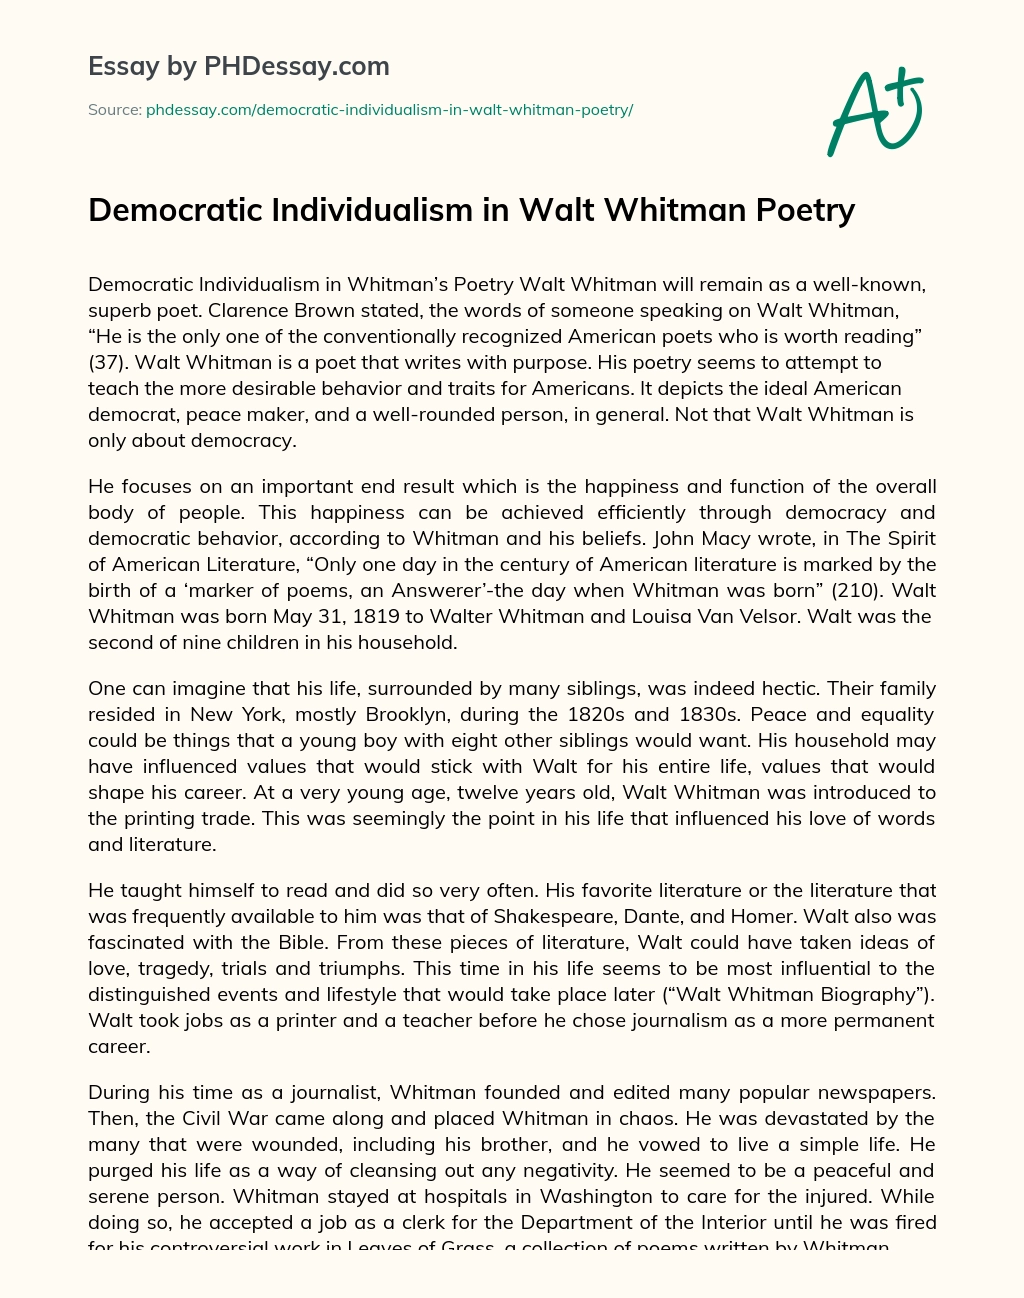 Democratic Individualism in Walt Whitman Poetry essay